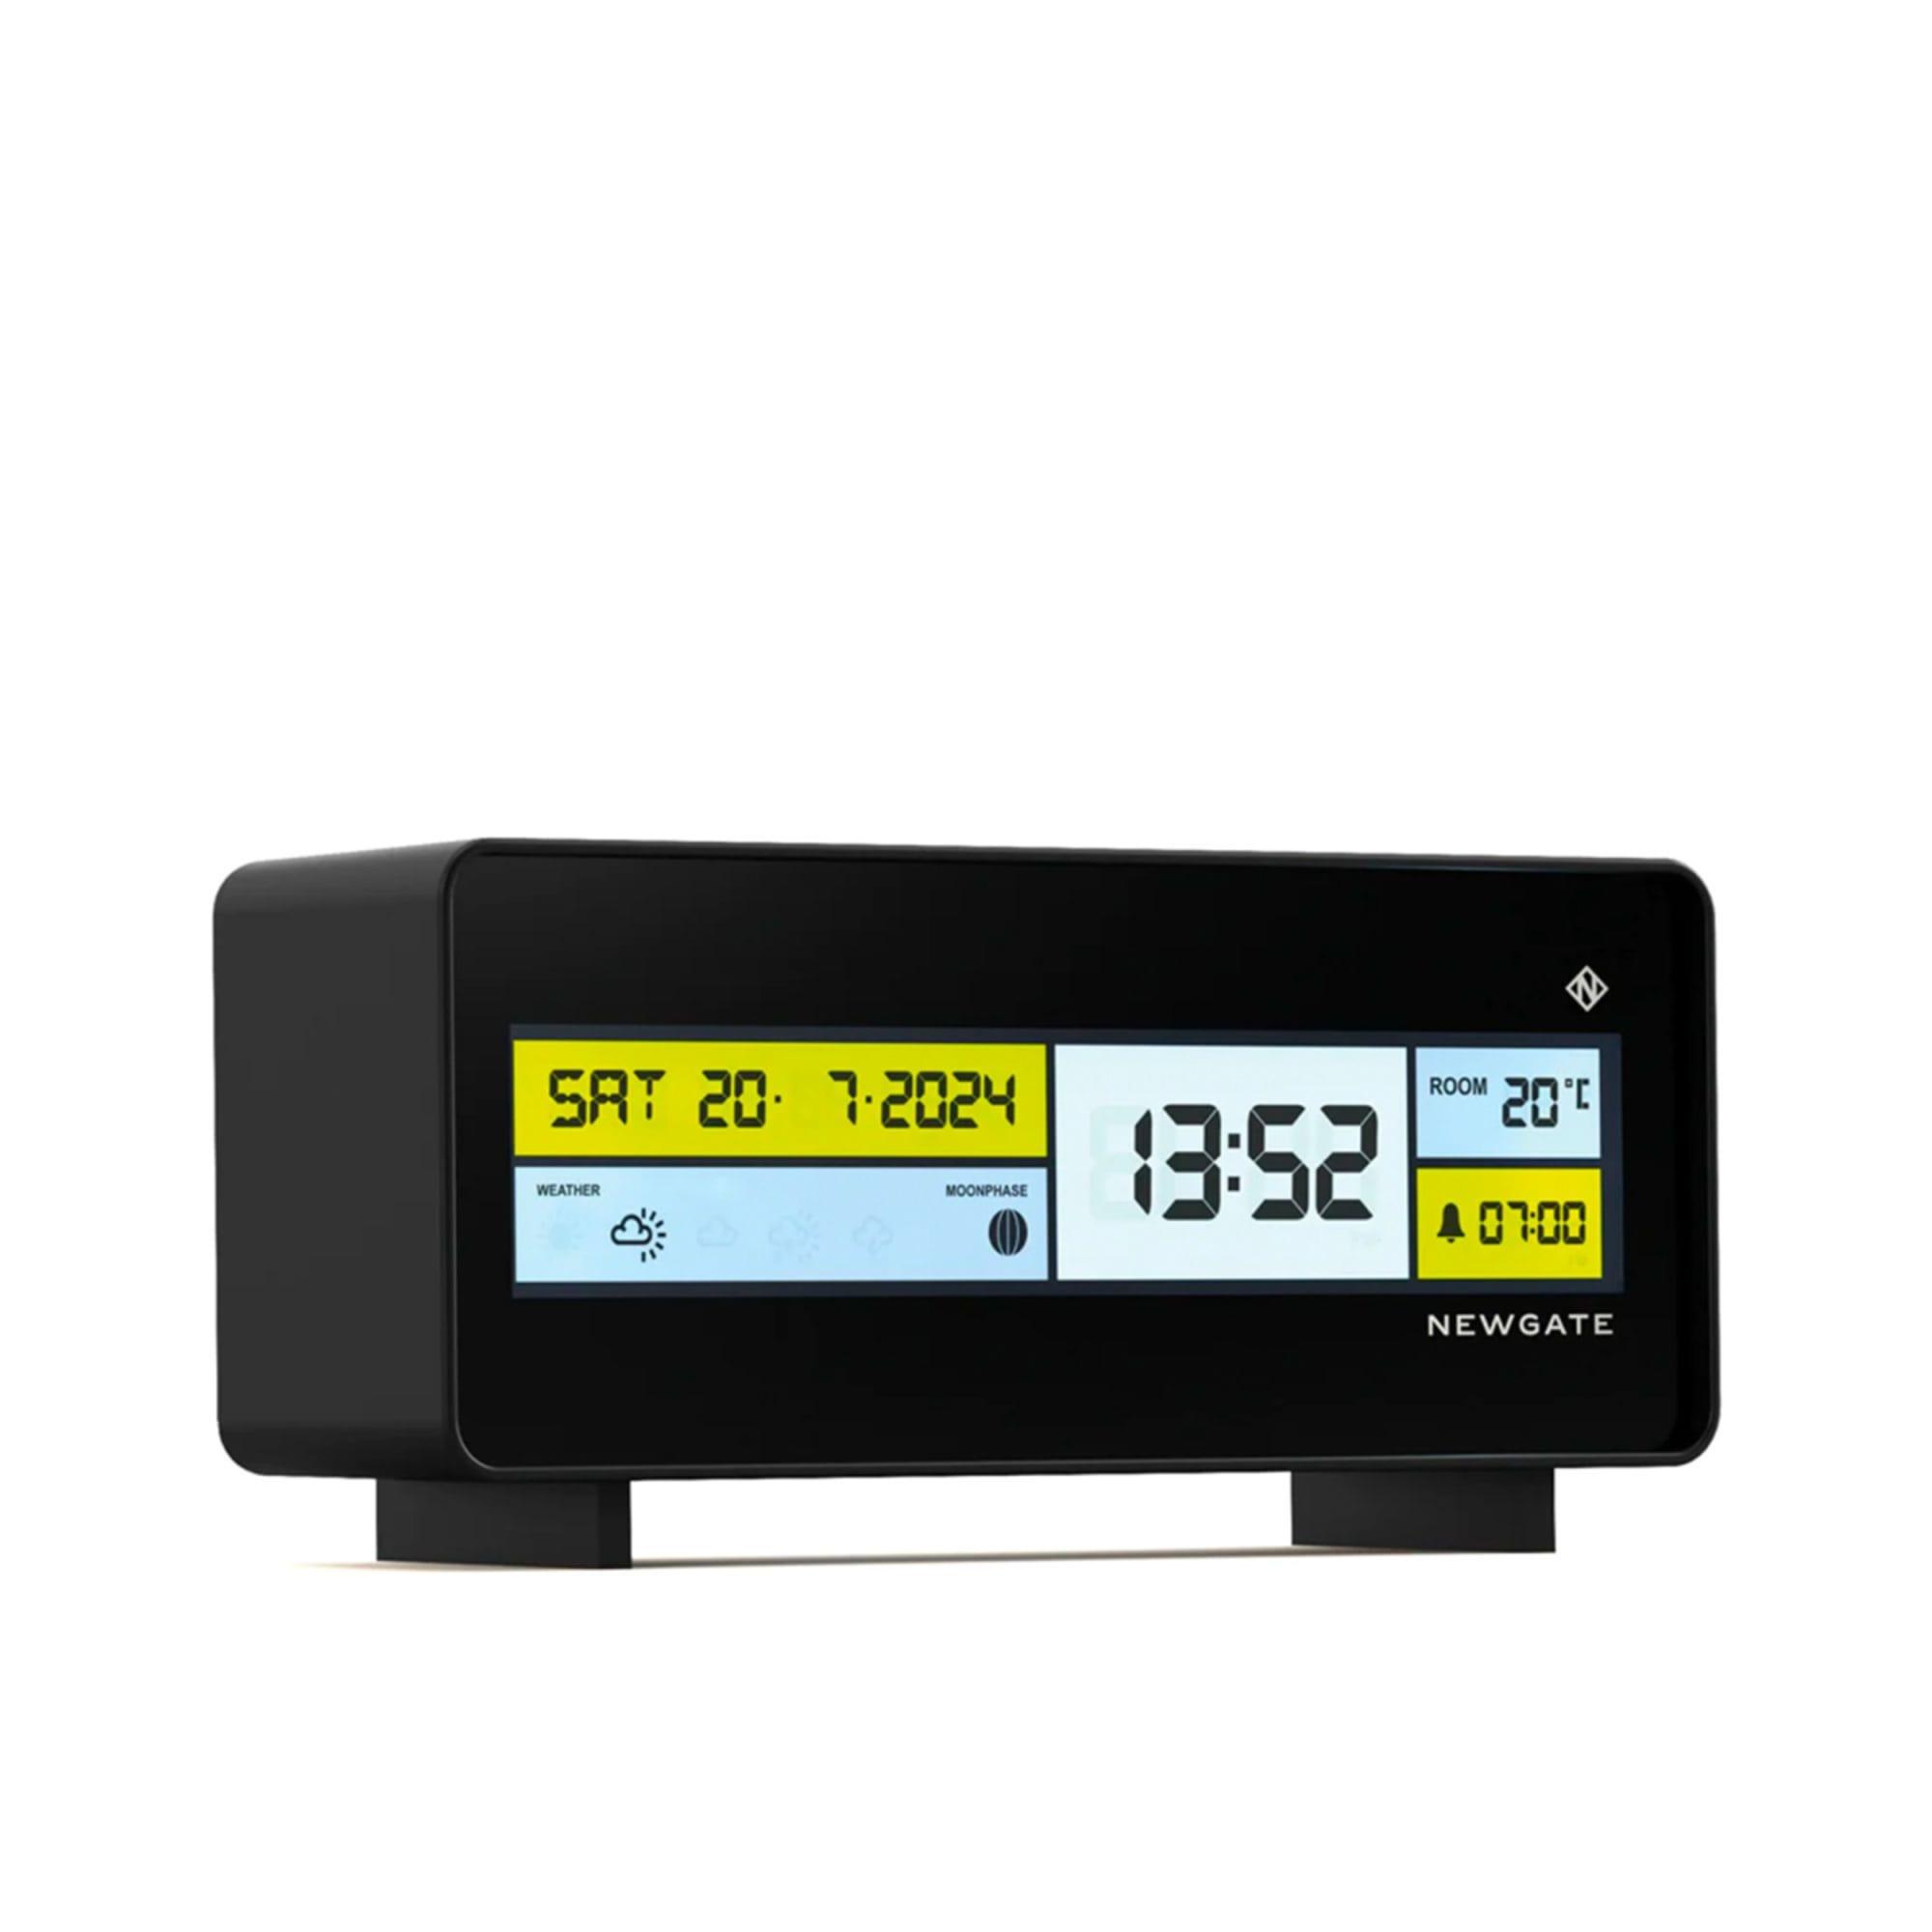 Newgate Futurama LCD Alarm Clock Black Image 3